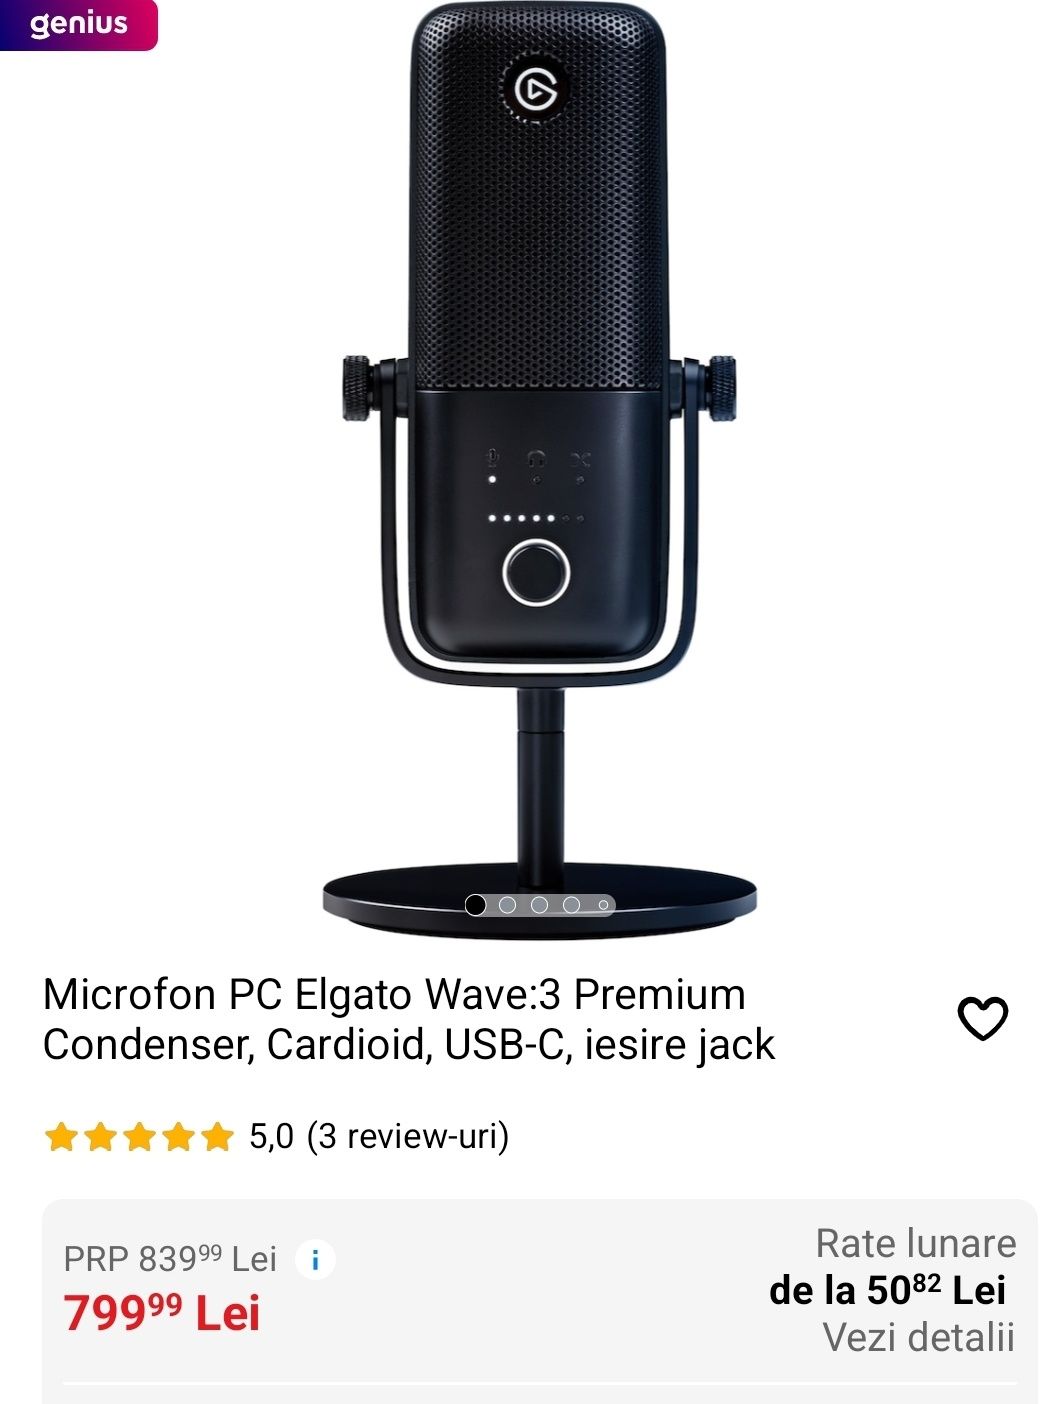 Microfon PC Elgato Wave:3 Premium Condenser, Cardioid, USB-C